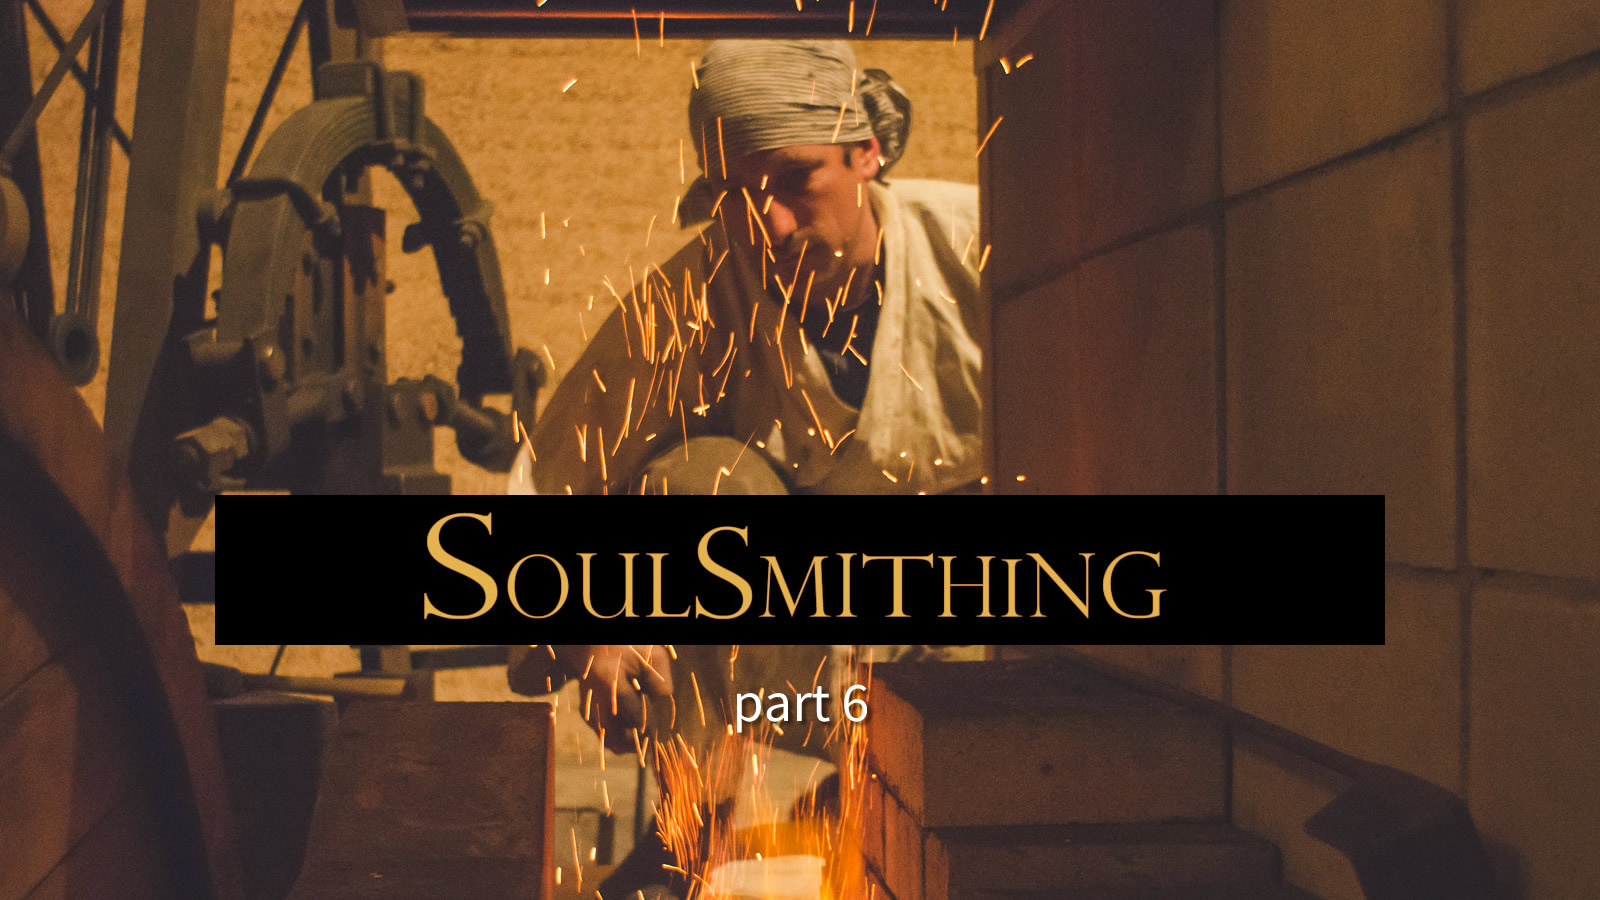 Soulsmithing part 6